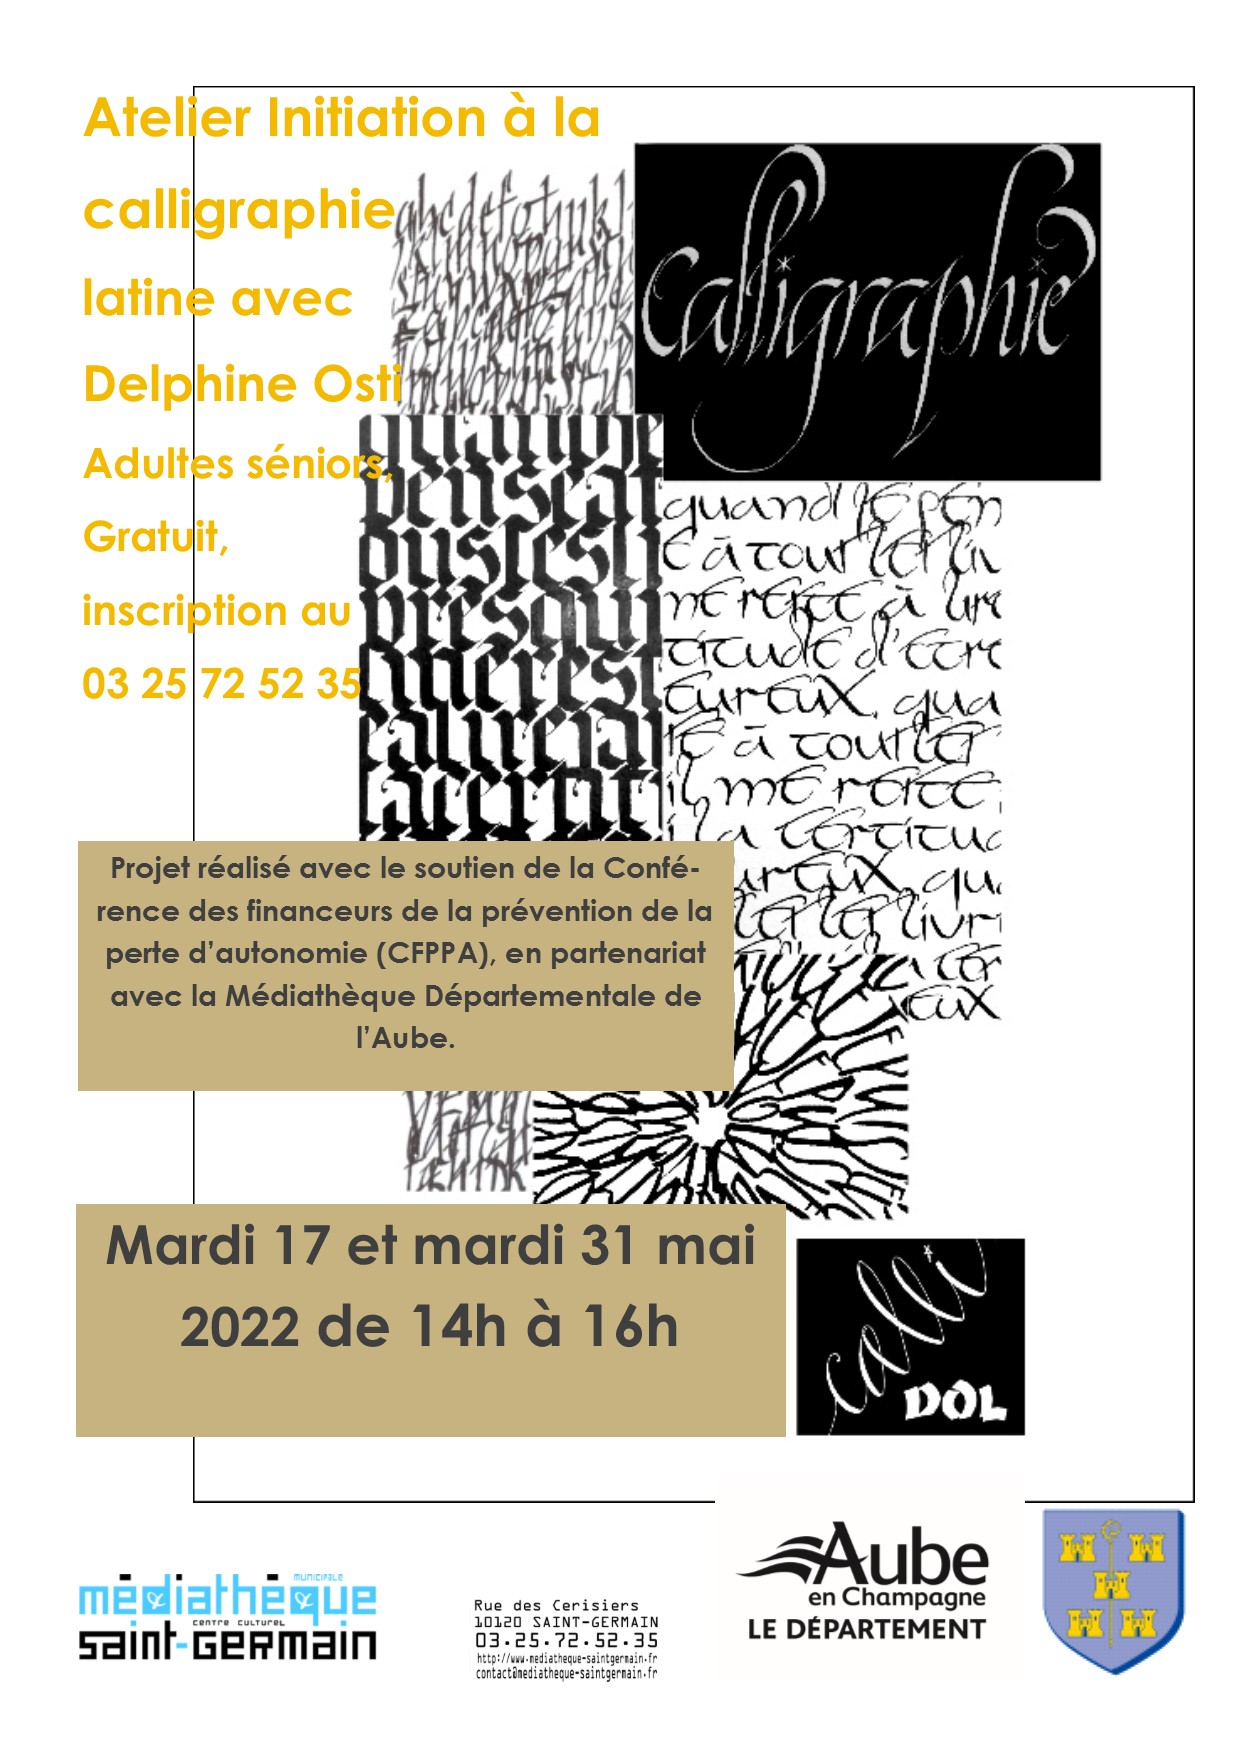 Atelier Initiation à la Calligraphie mardi 17 et 31 mai 2022